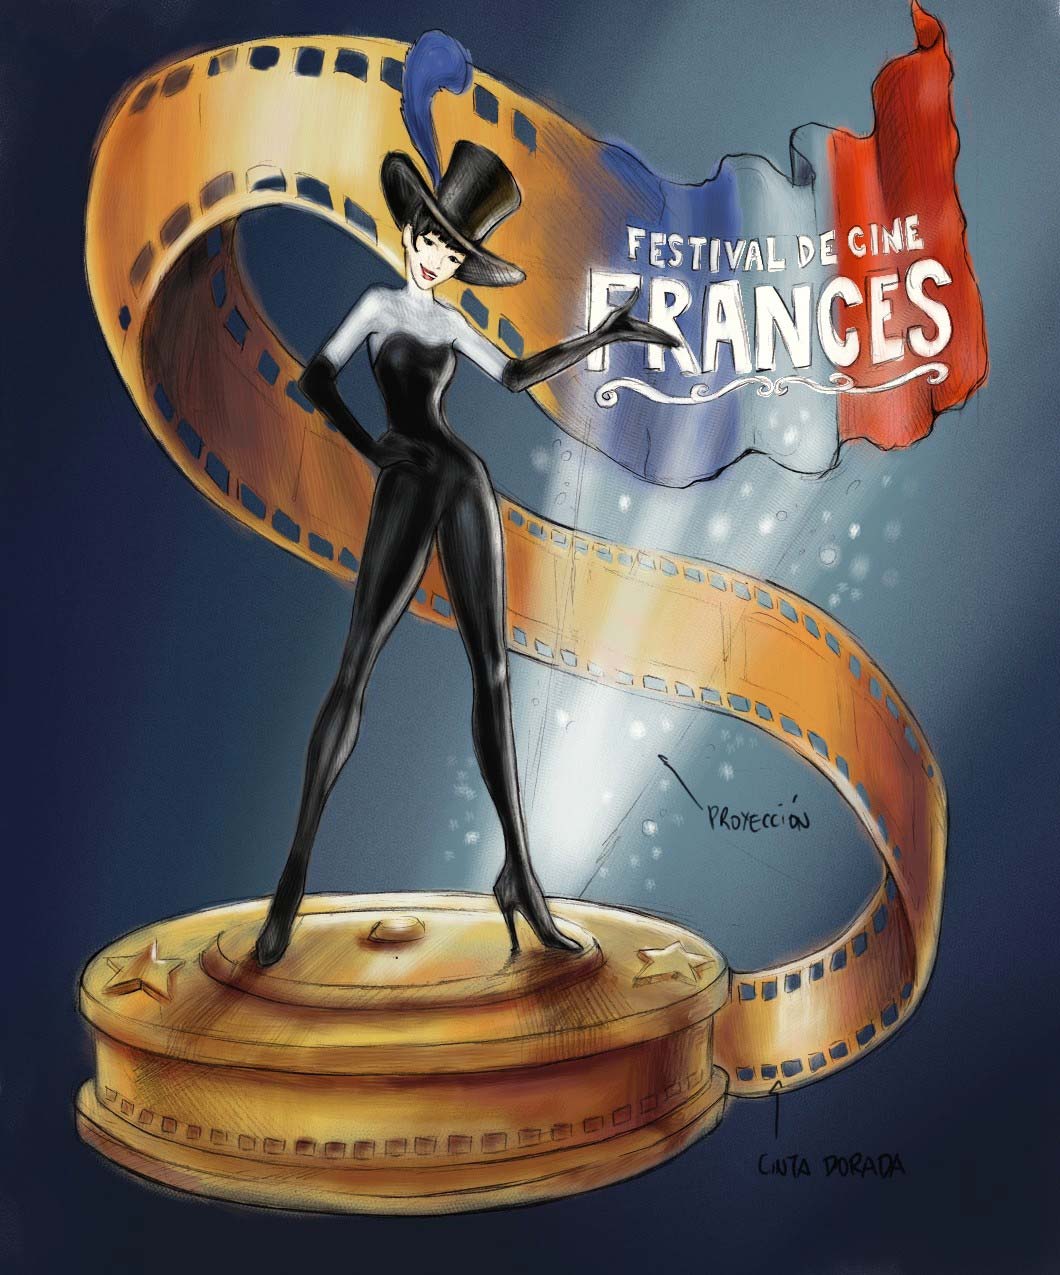 NUEVOS CINEASTAS (Operas primas)(Festival de Cine Frances 2006)